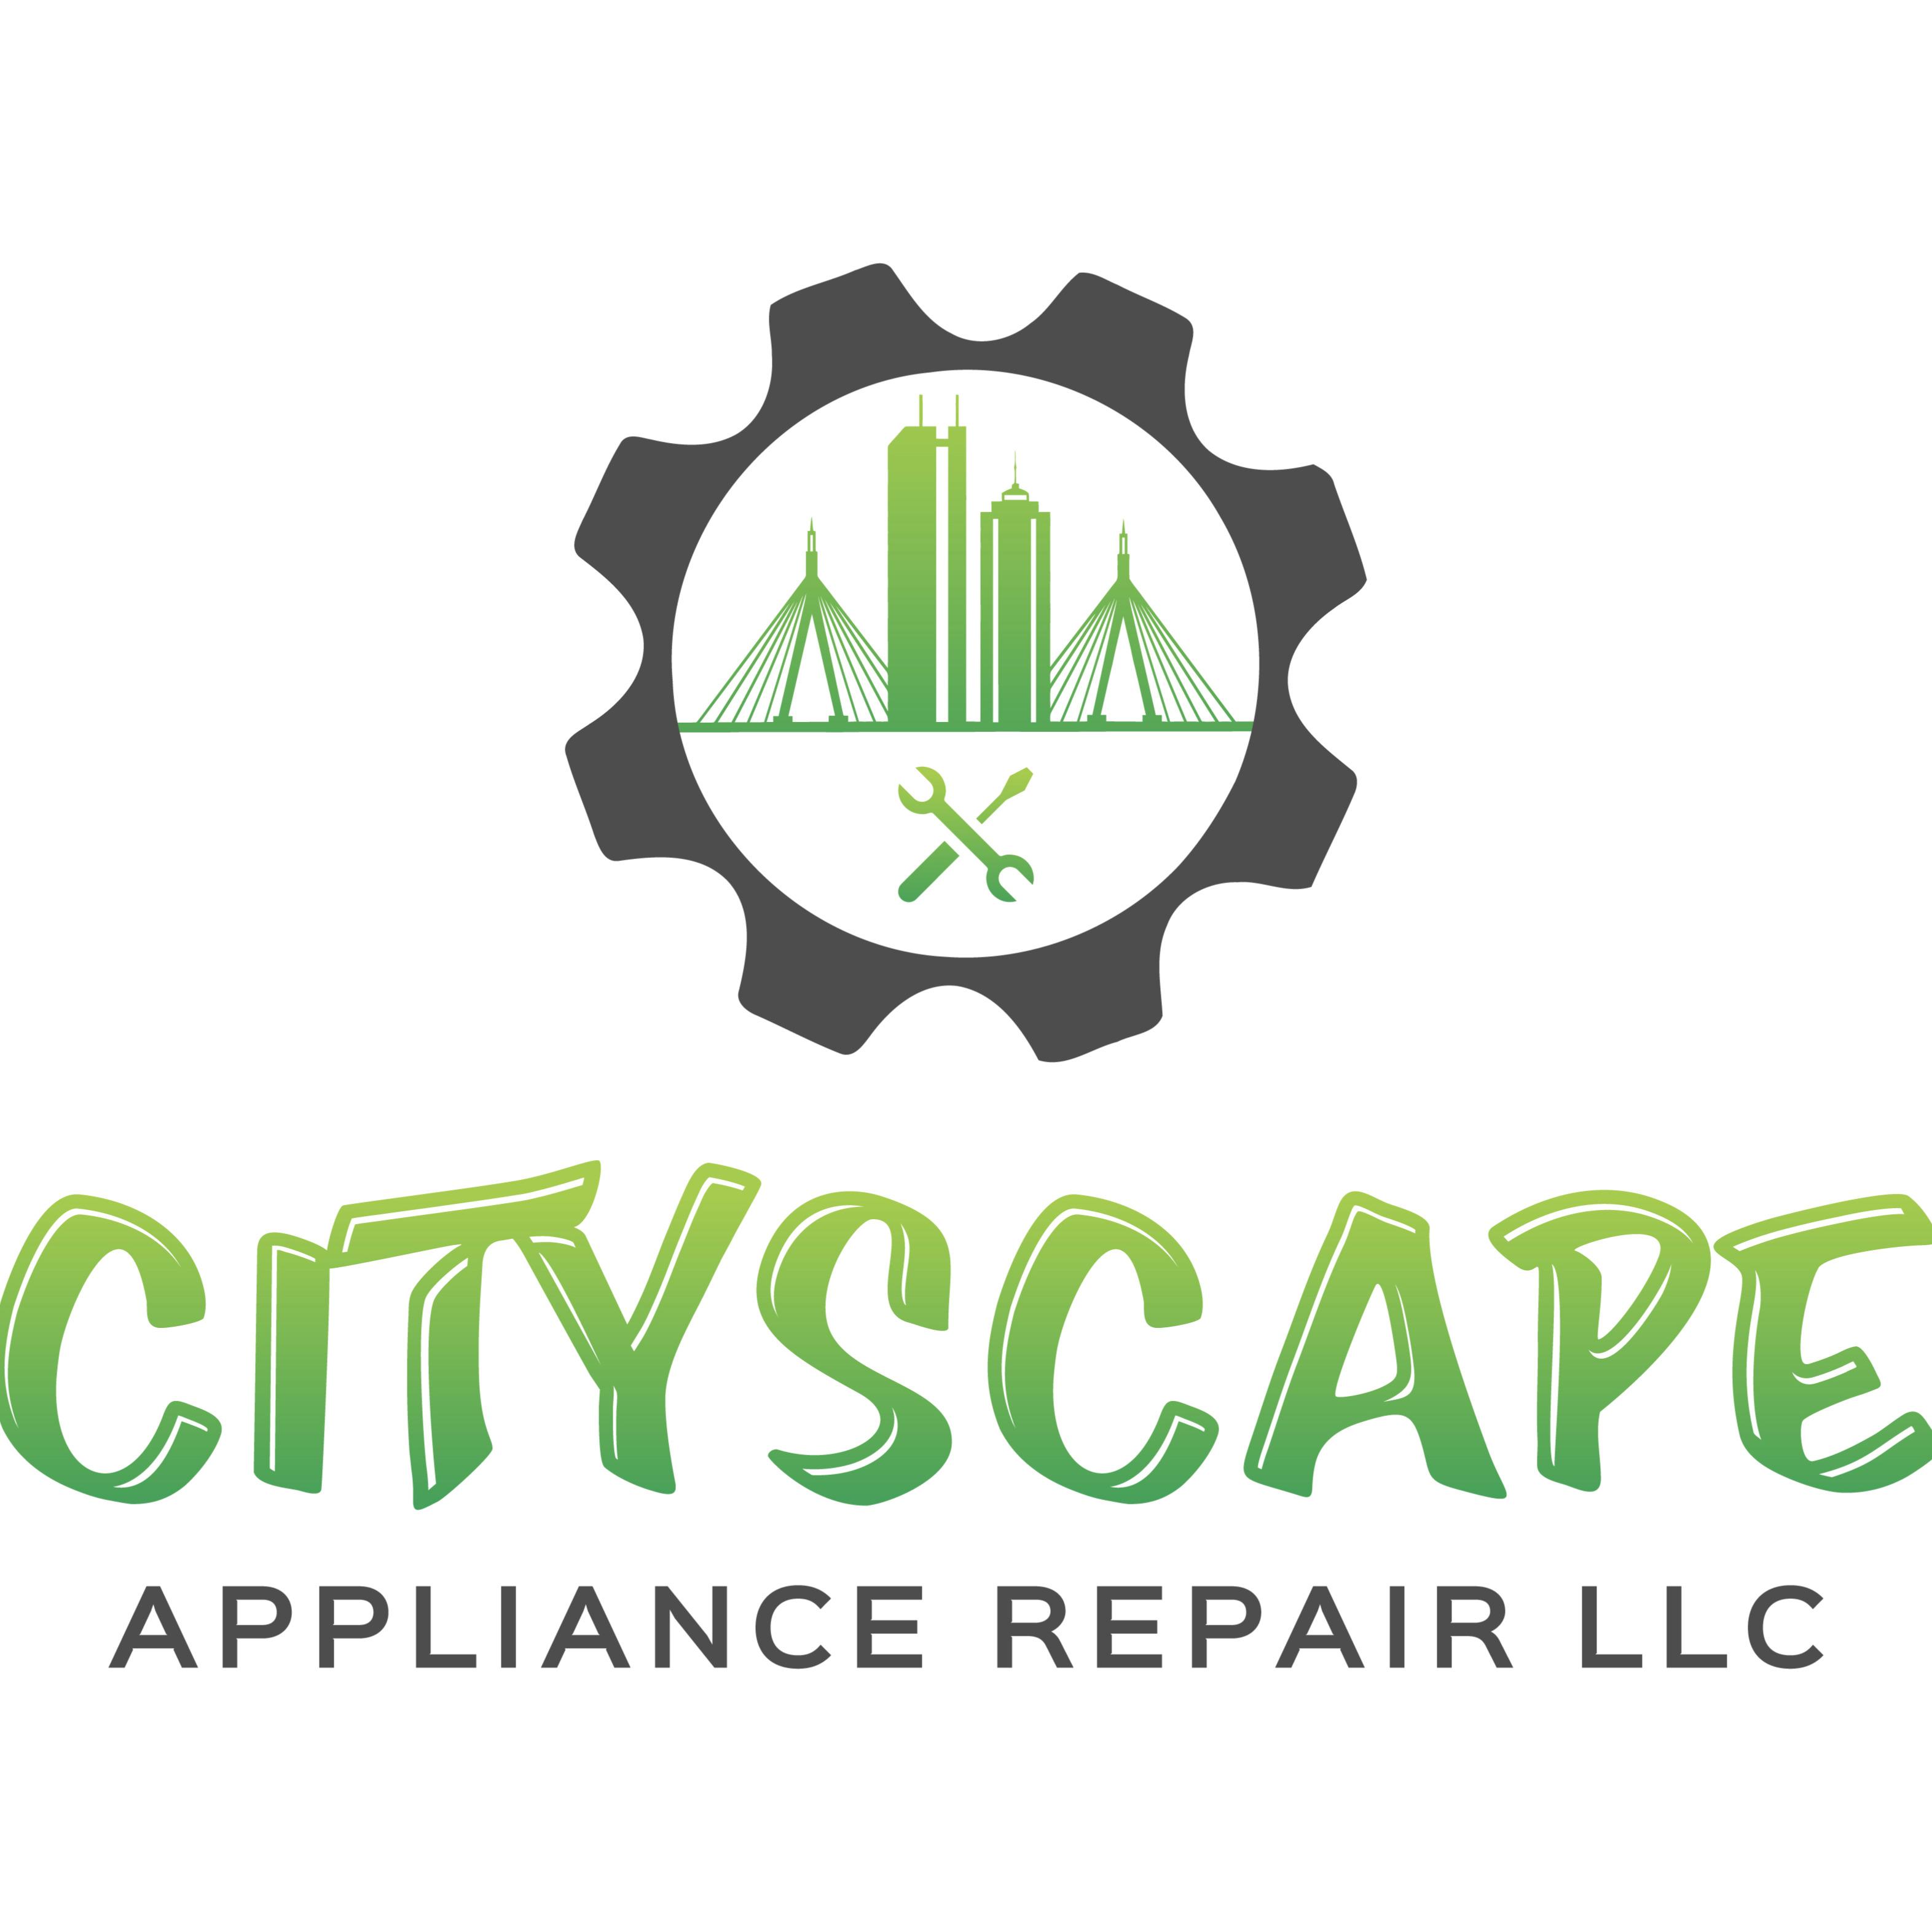 Cityscape Appliance Repair